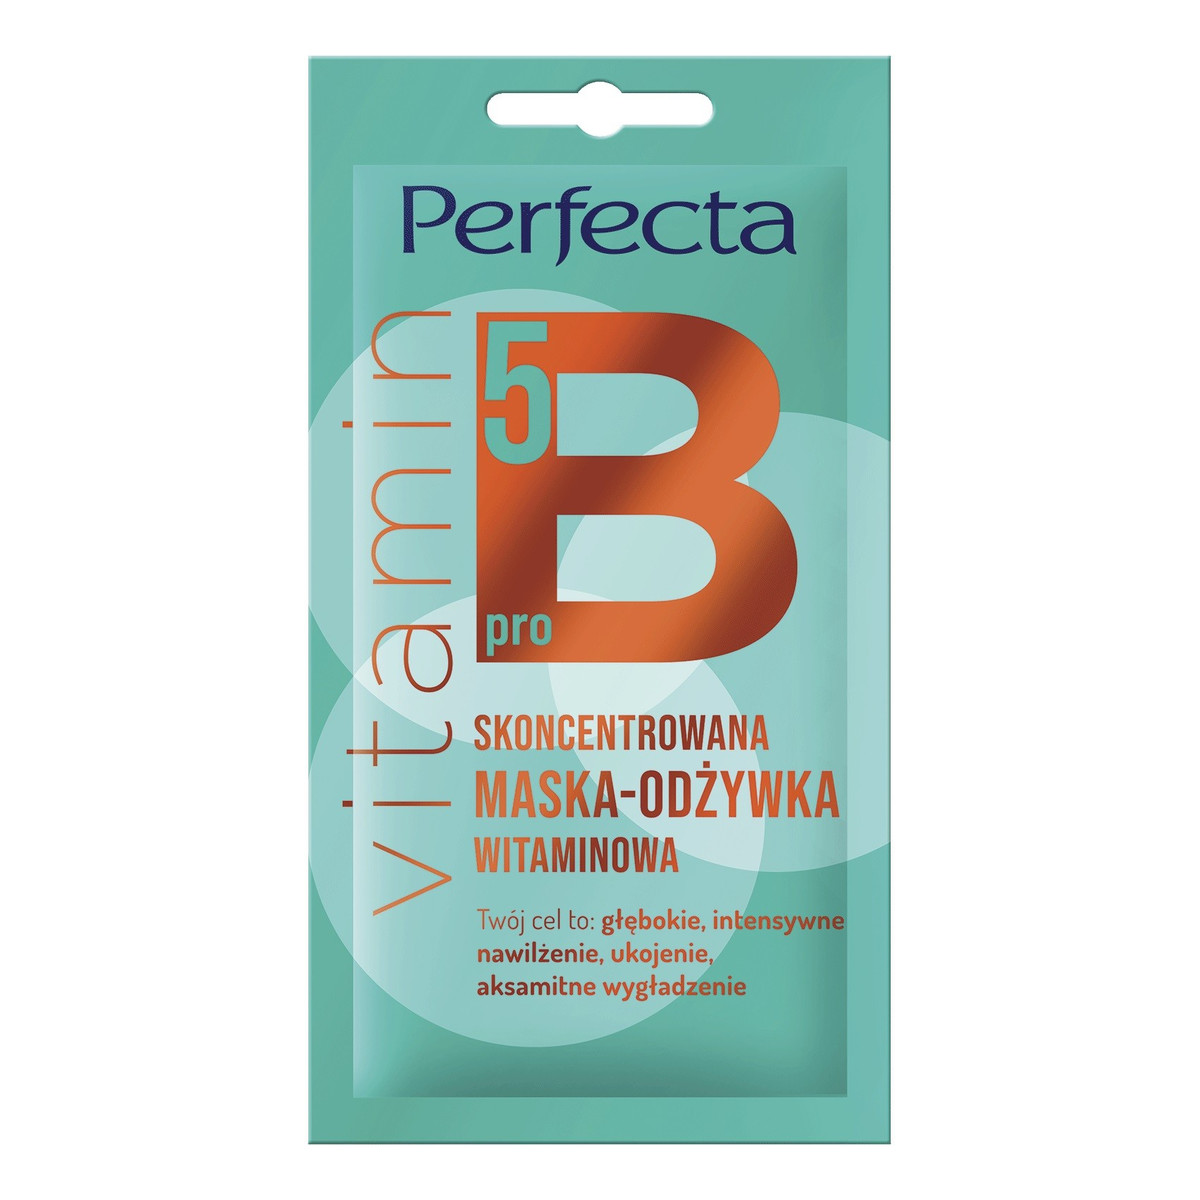 Perfecta Perfecta Beauty Vitamin pro B5 Skoncentrowana Maska-odżywka witaminowa 8ml